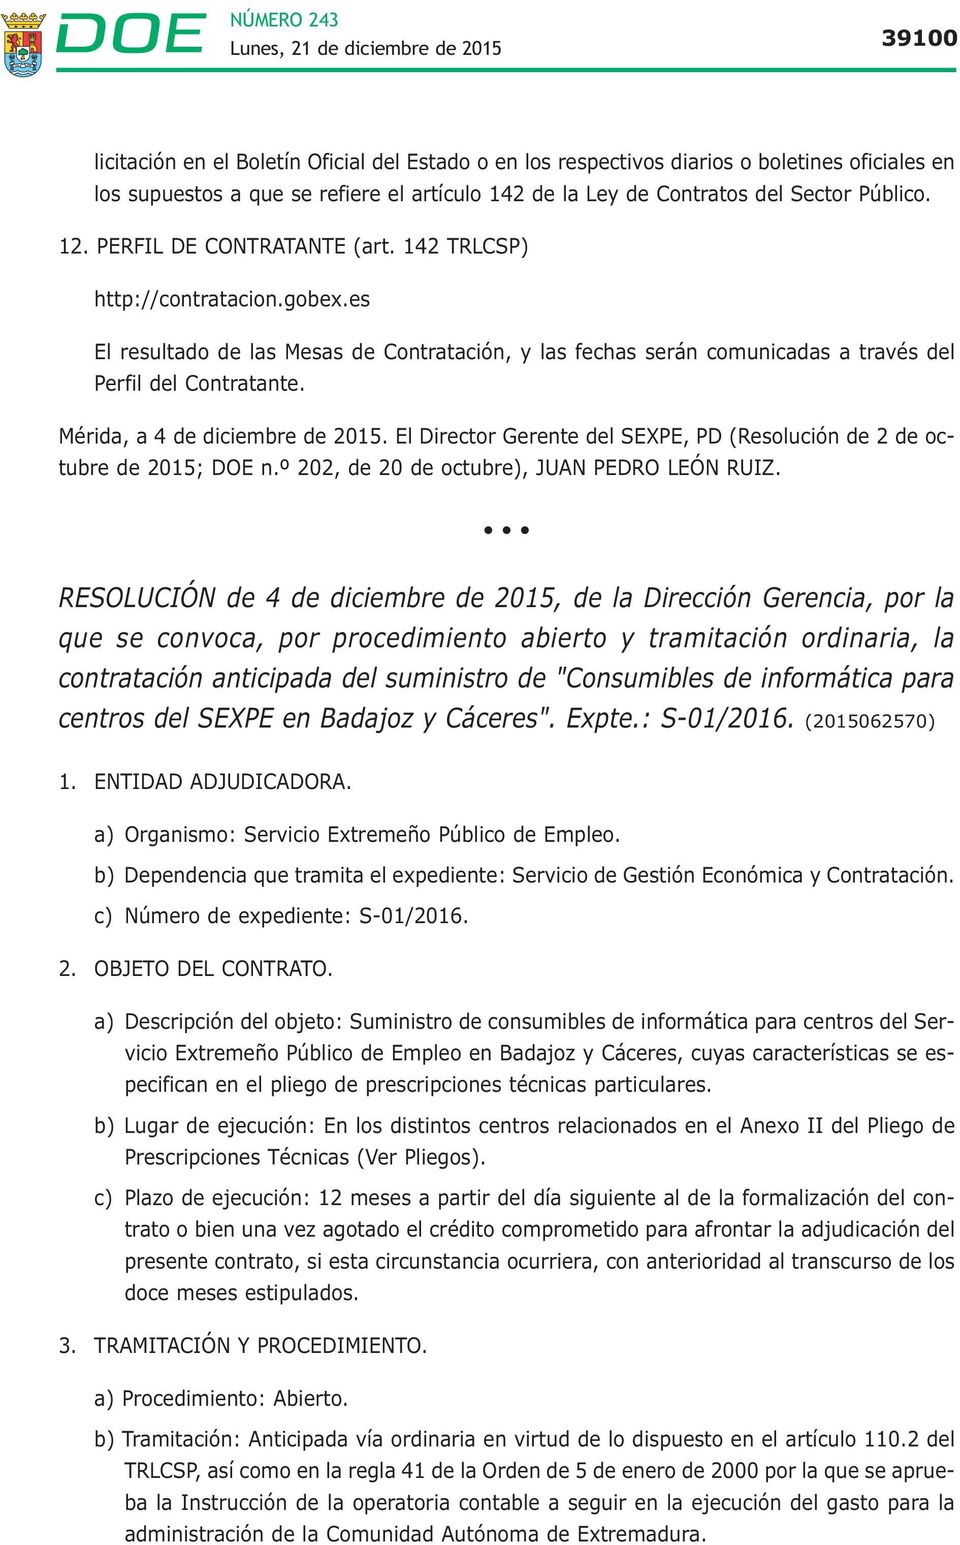 Mérida, a 4 de diciembre de 2015. El Director Gerente del SEXPE, PD (Resolución de 2 de octubre de 2015; DOE n.º 202, de 20 de octubre), JUAN PEDRO LEÓN RUIZ.